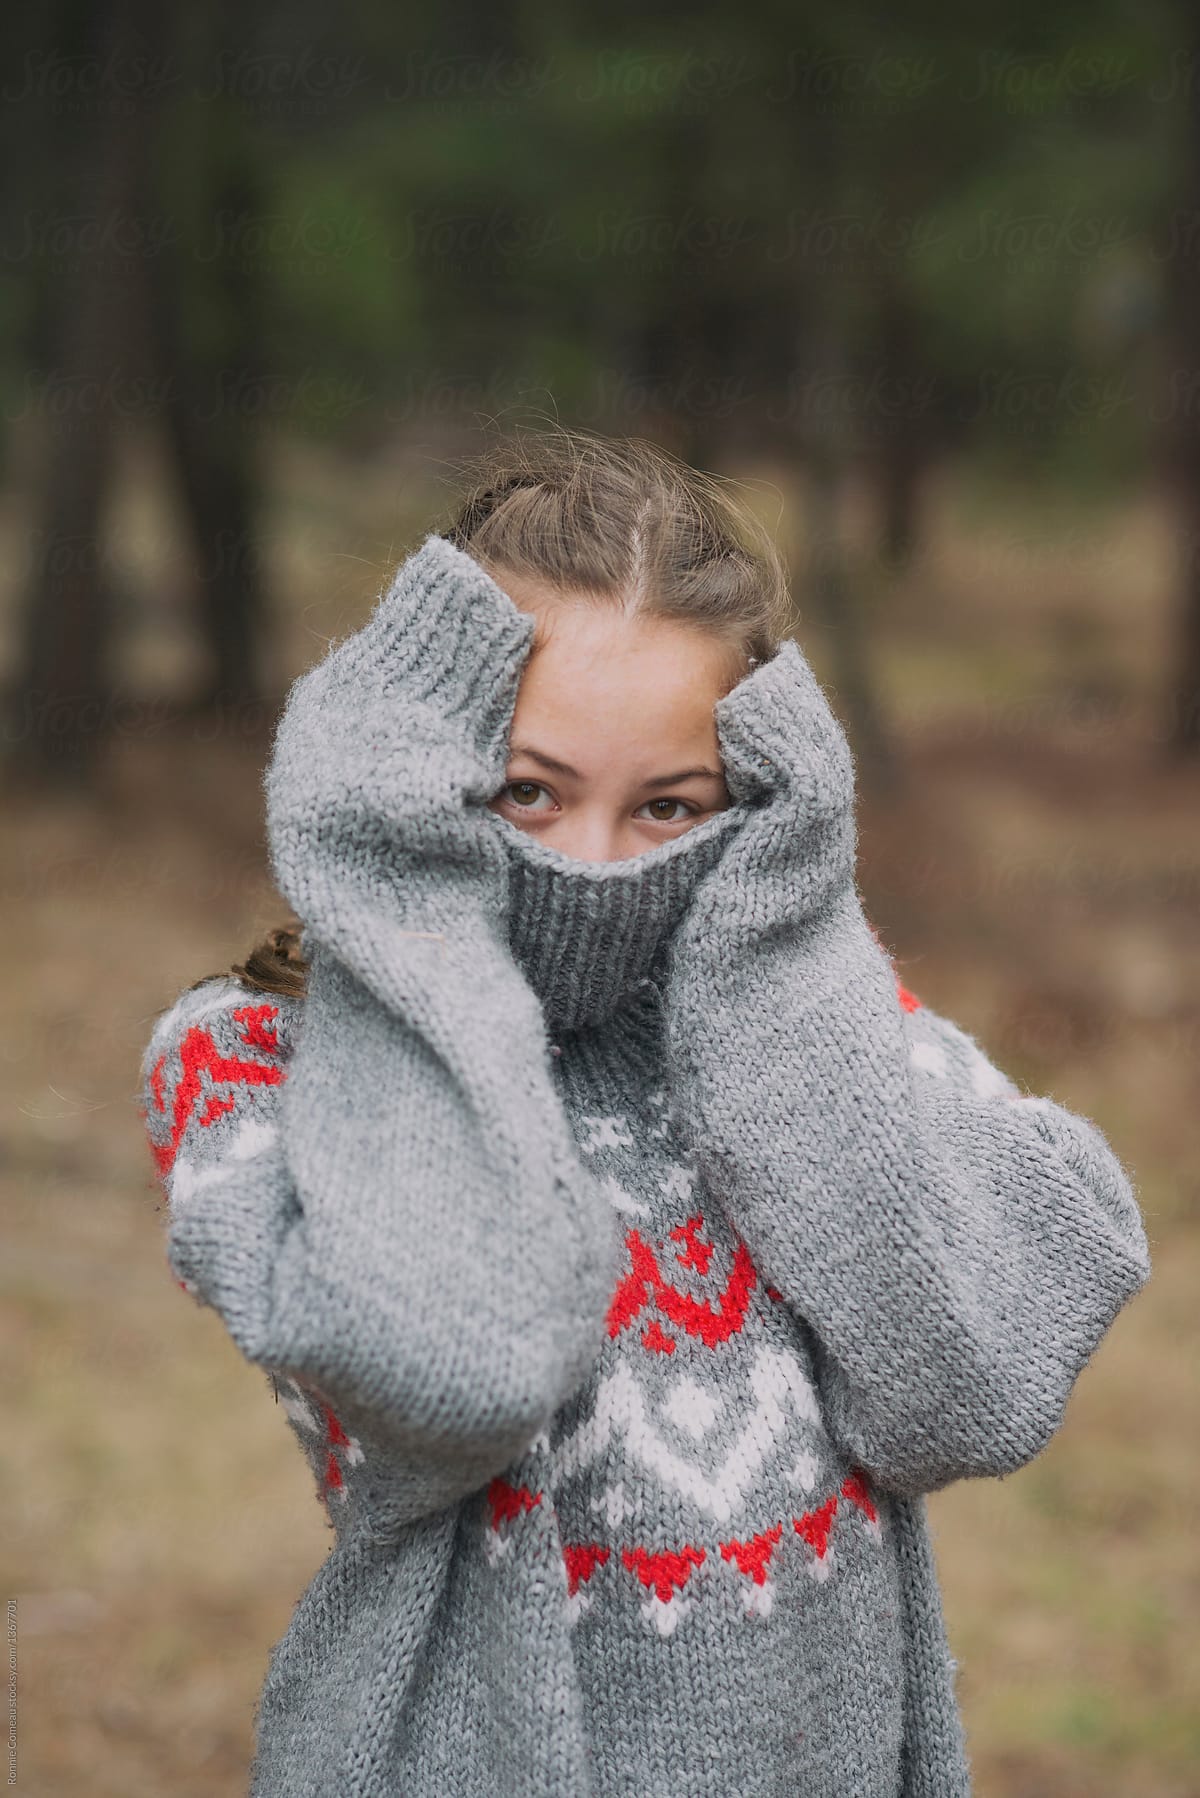 Teen Girl Wearing Oversized Sweater by Stocksy Contributor